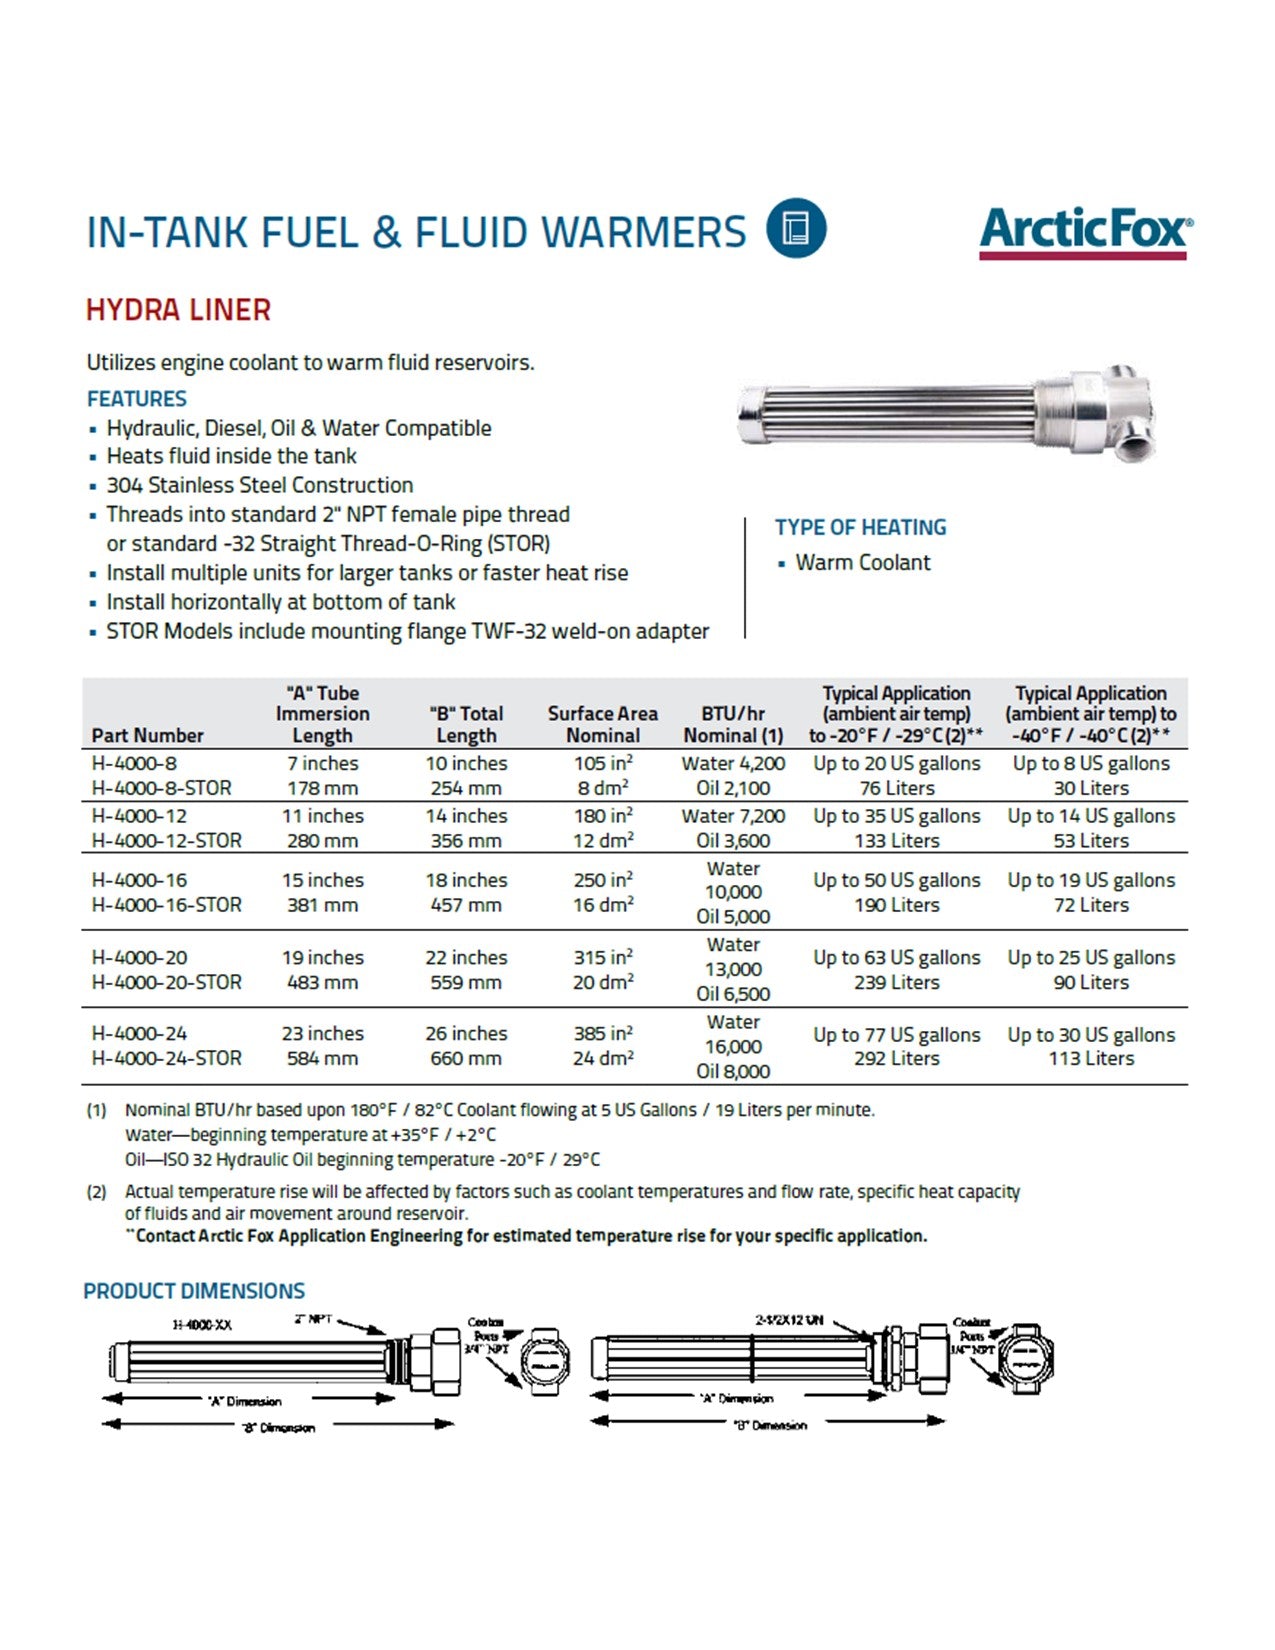 Arctic Fox Hydra Liner In-Tank Fluid Warmer H-4000-12